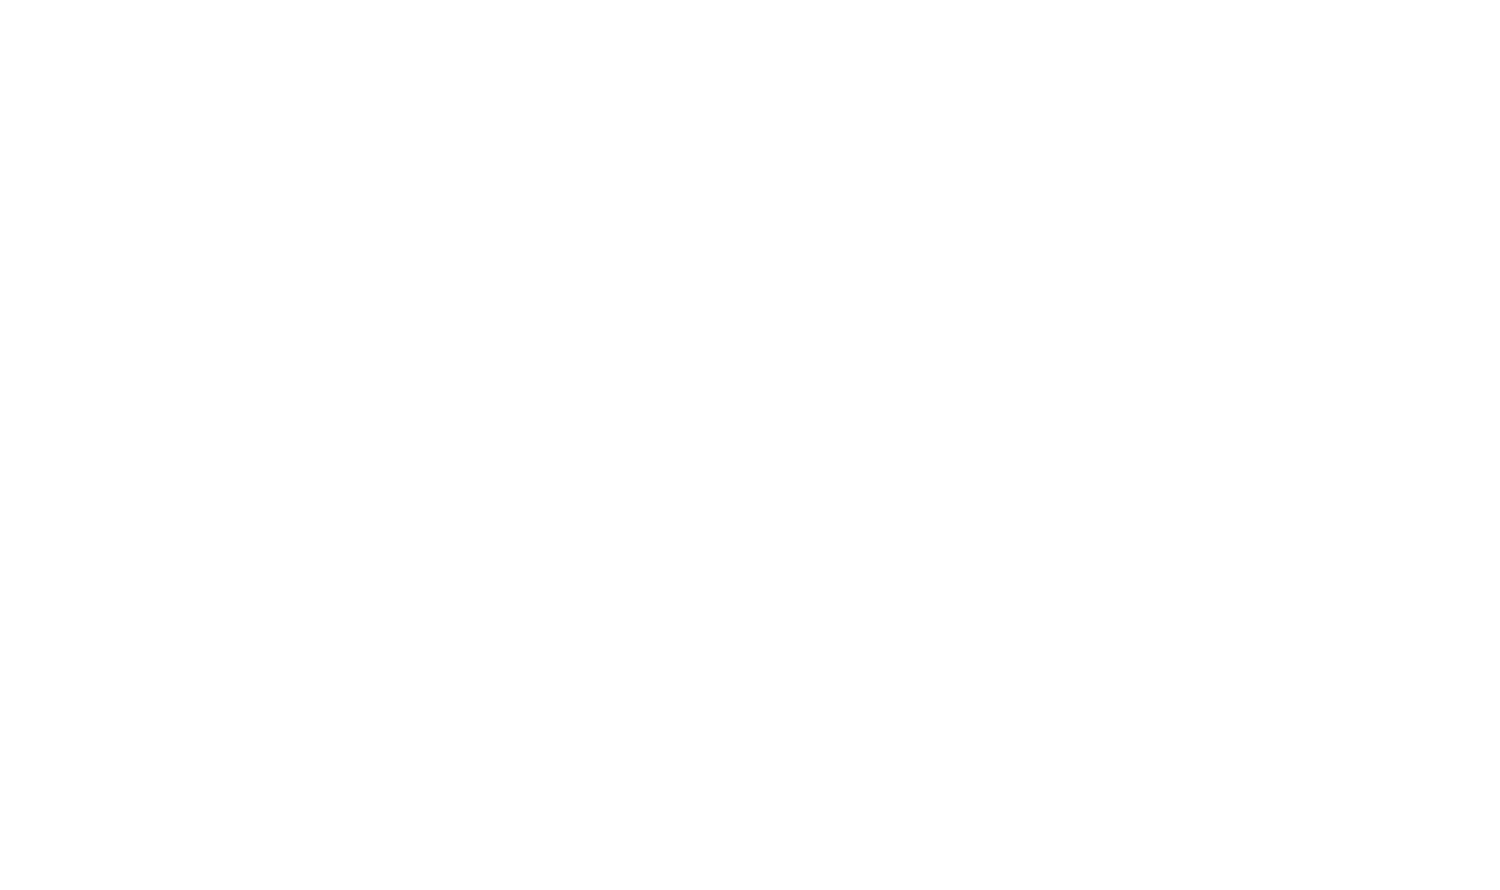 3D医用画像処理ワークステーション Ziostation2